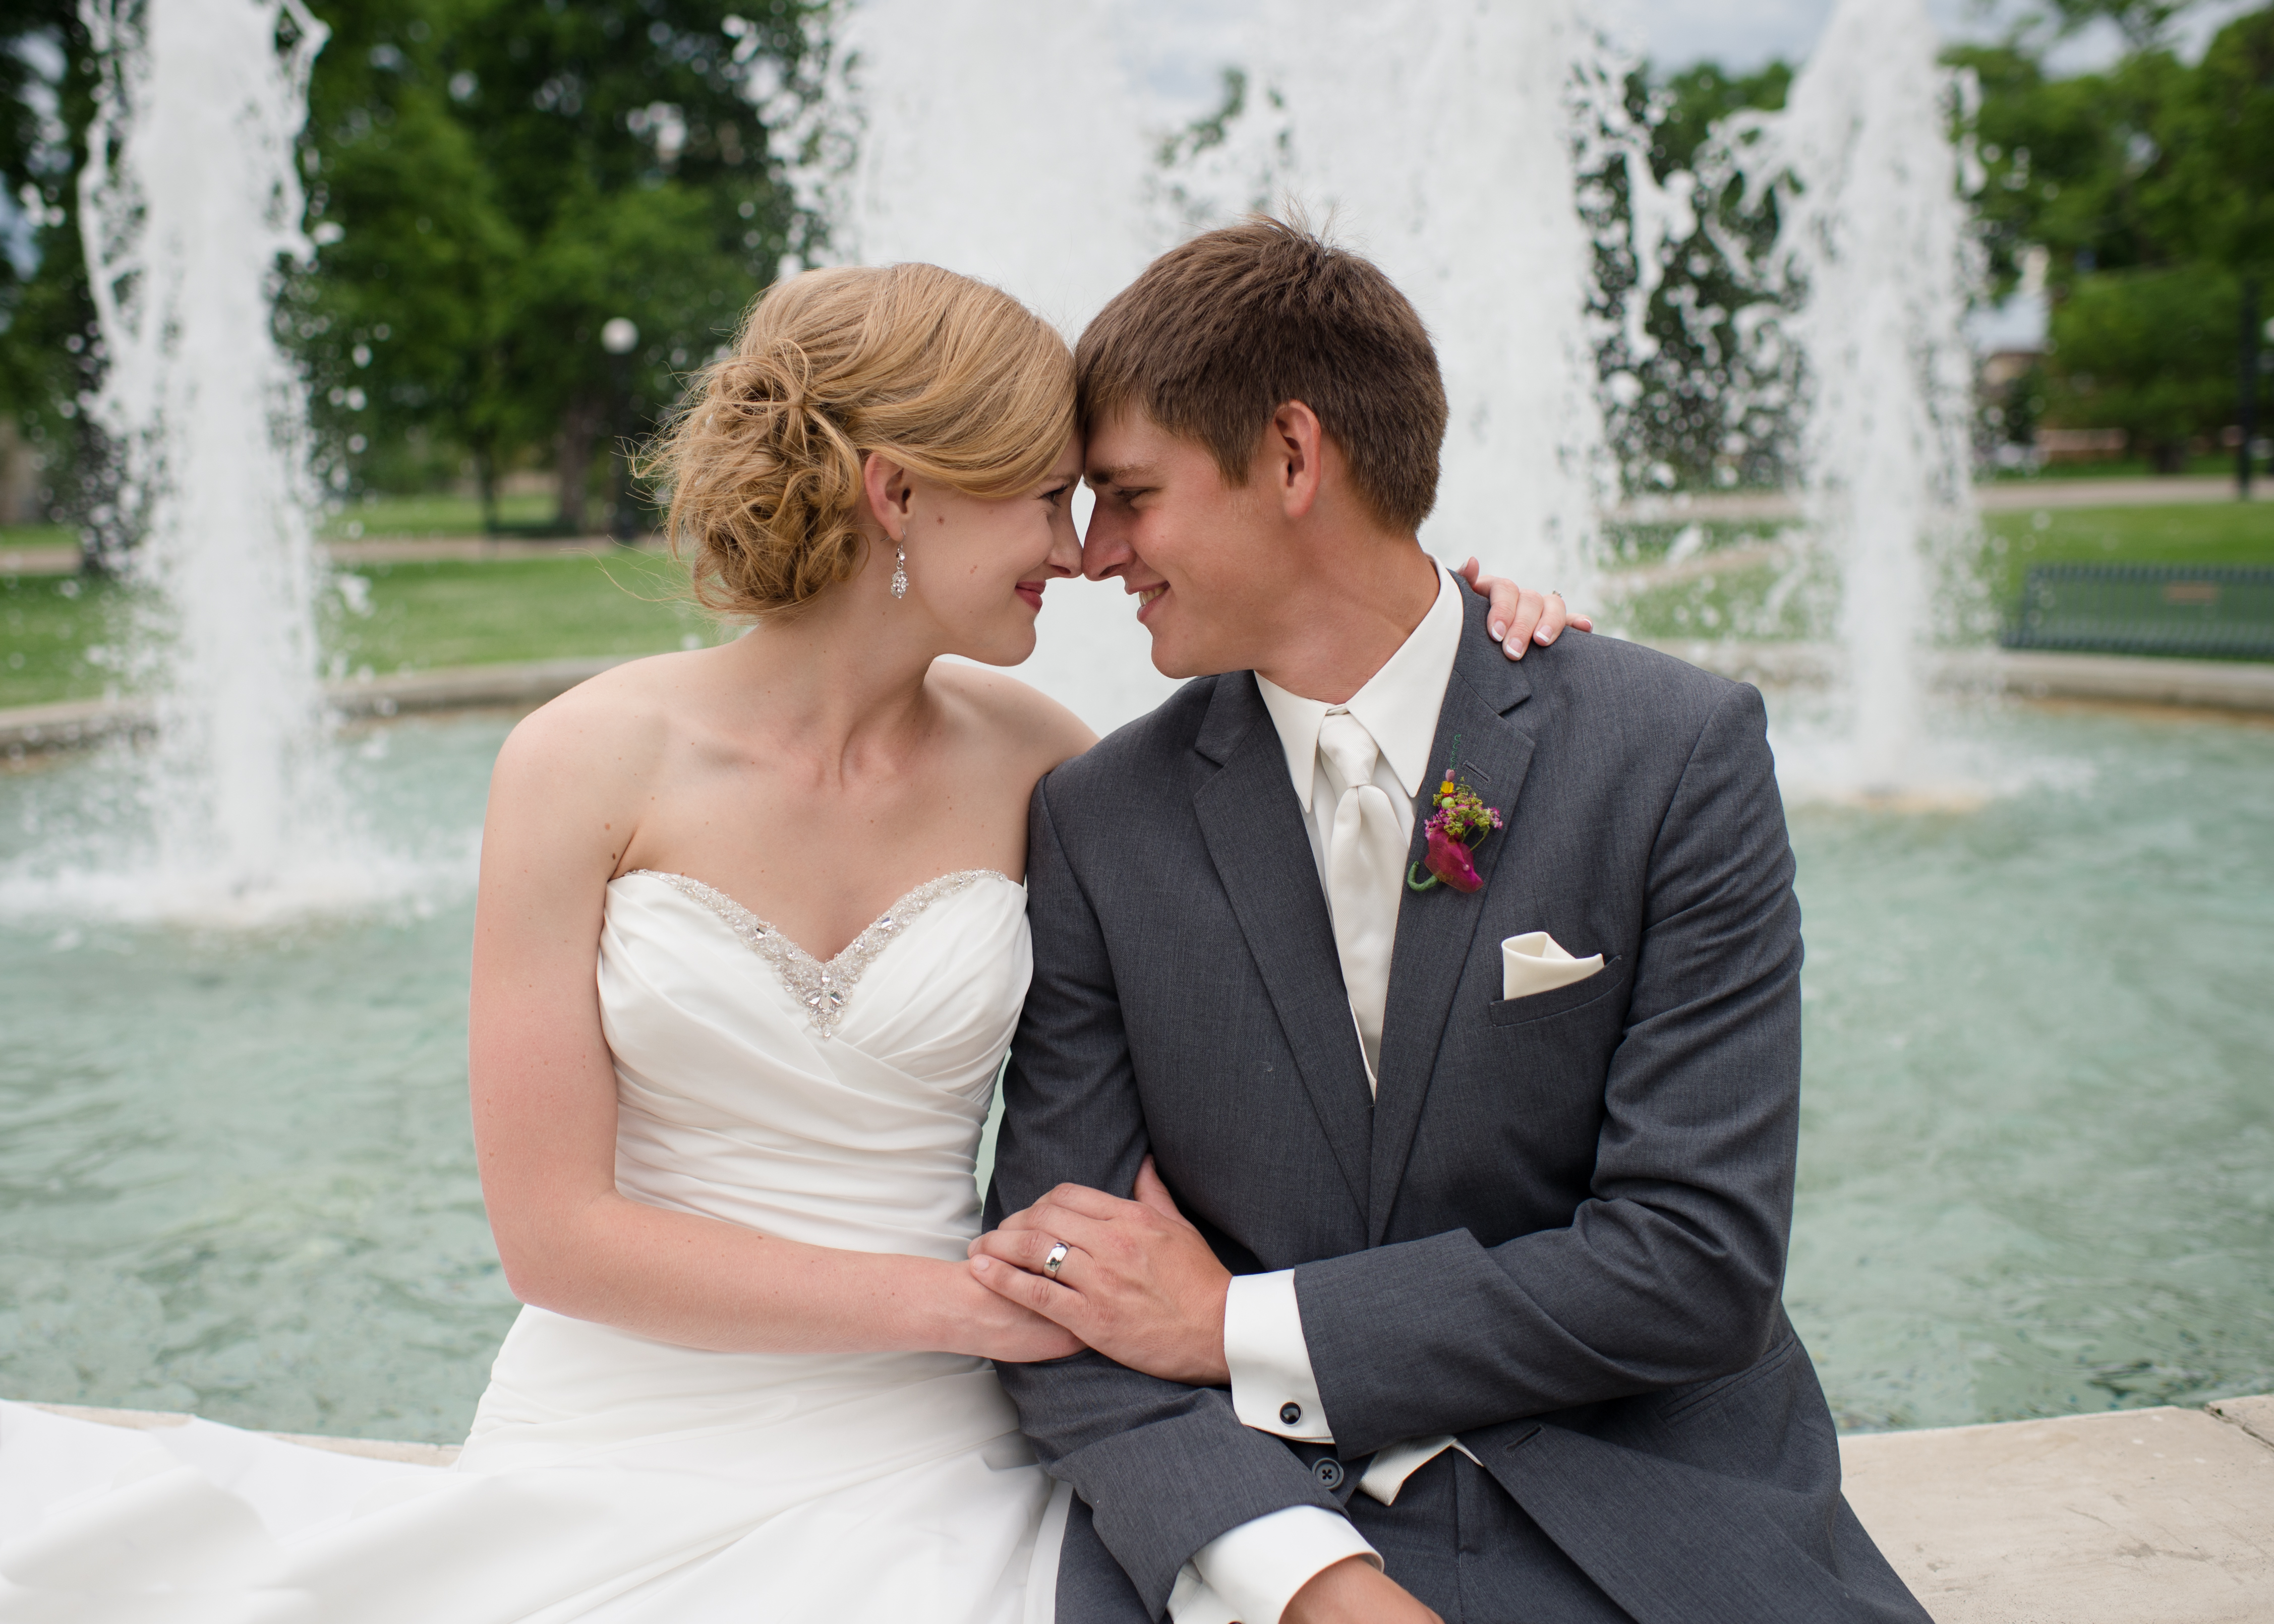 Breanna & Cody – La Crosse Wisconsin, Wedding Photography